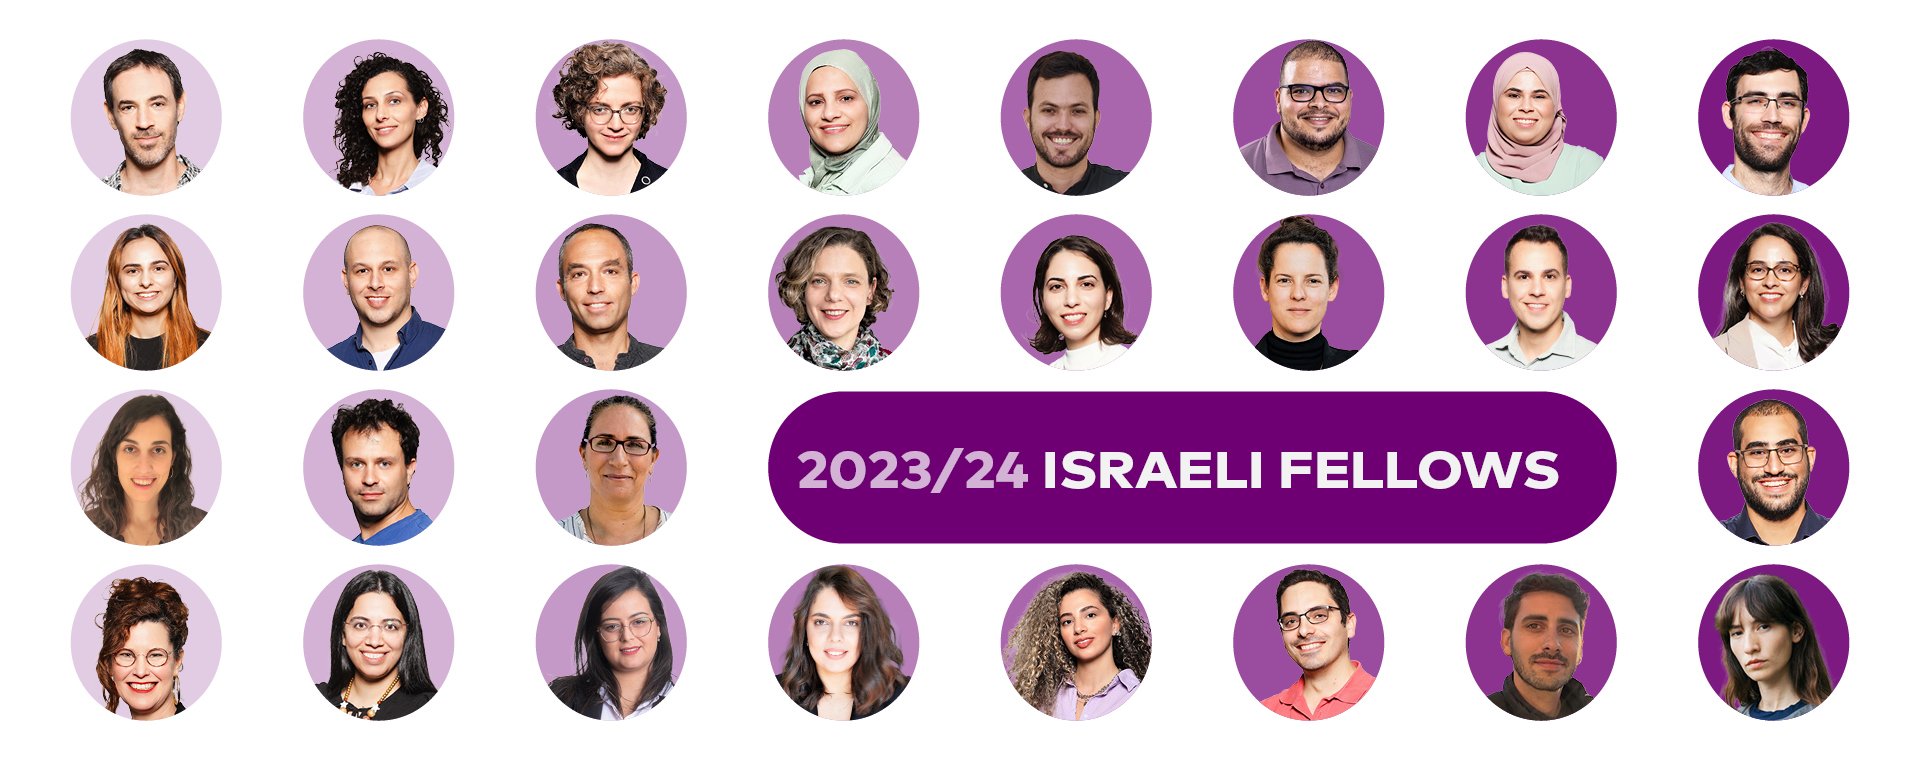 Israeli fellows 2023-24